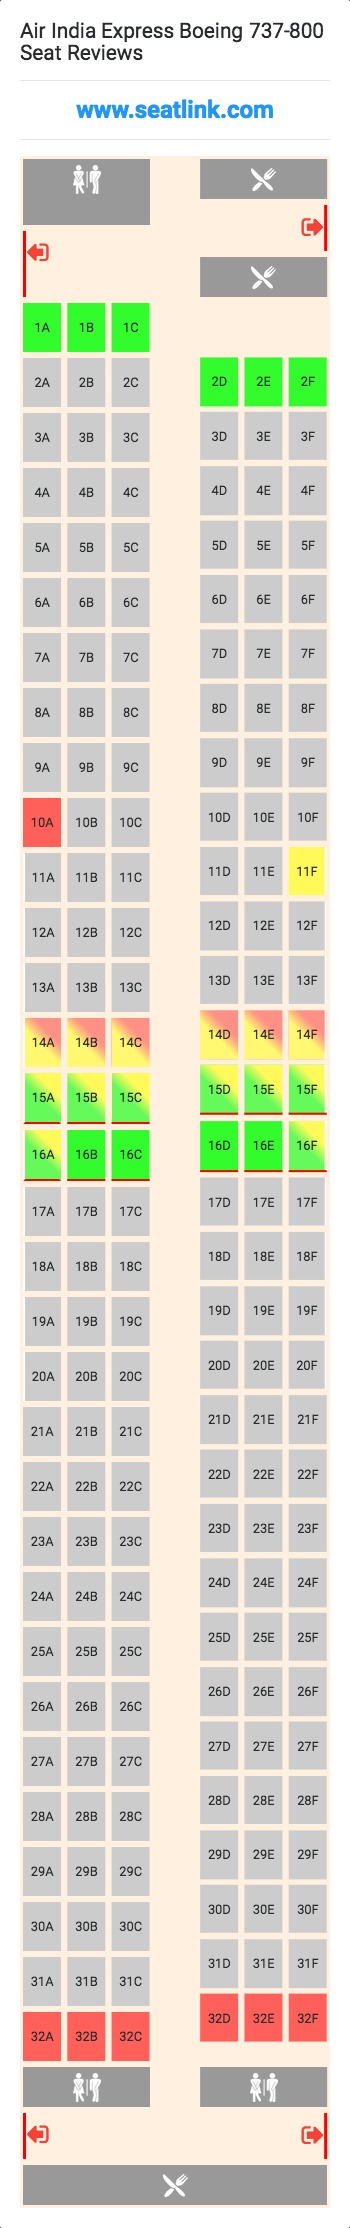 Royal Jordanian Flight 264 Seating Chart